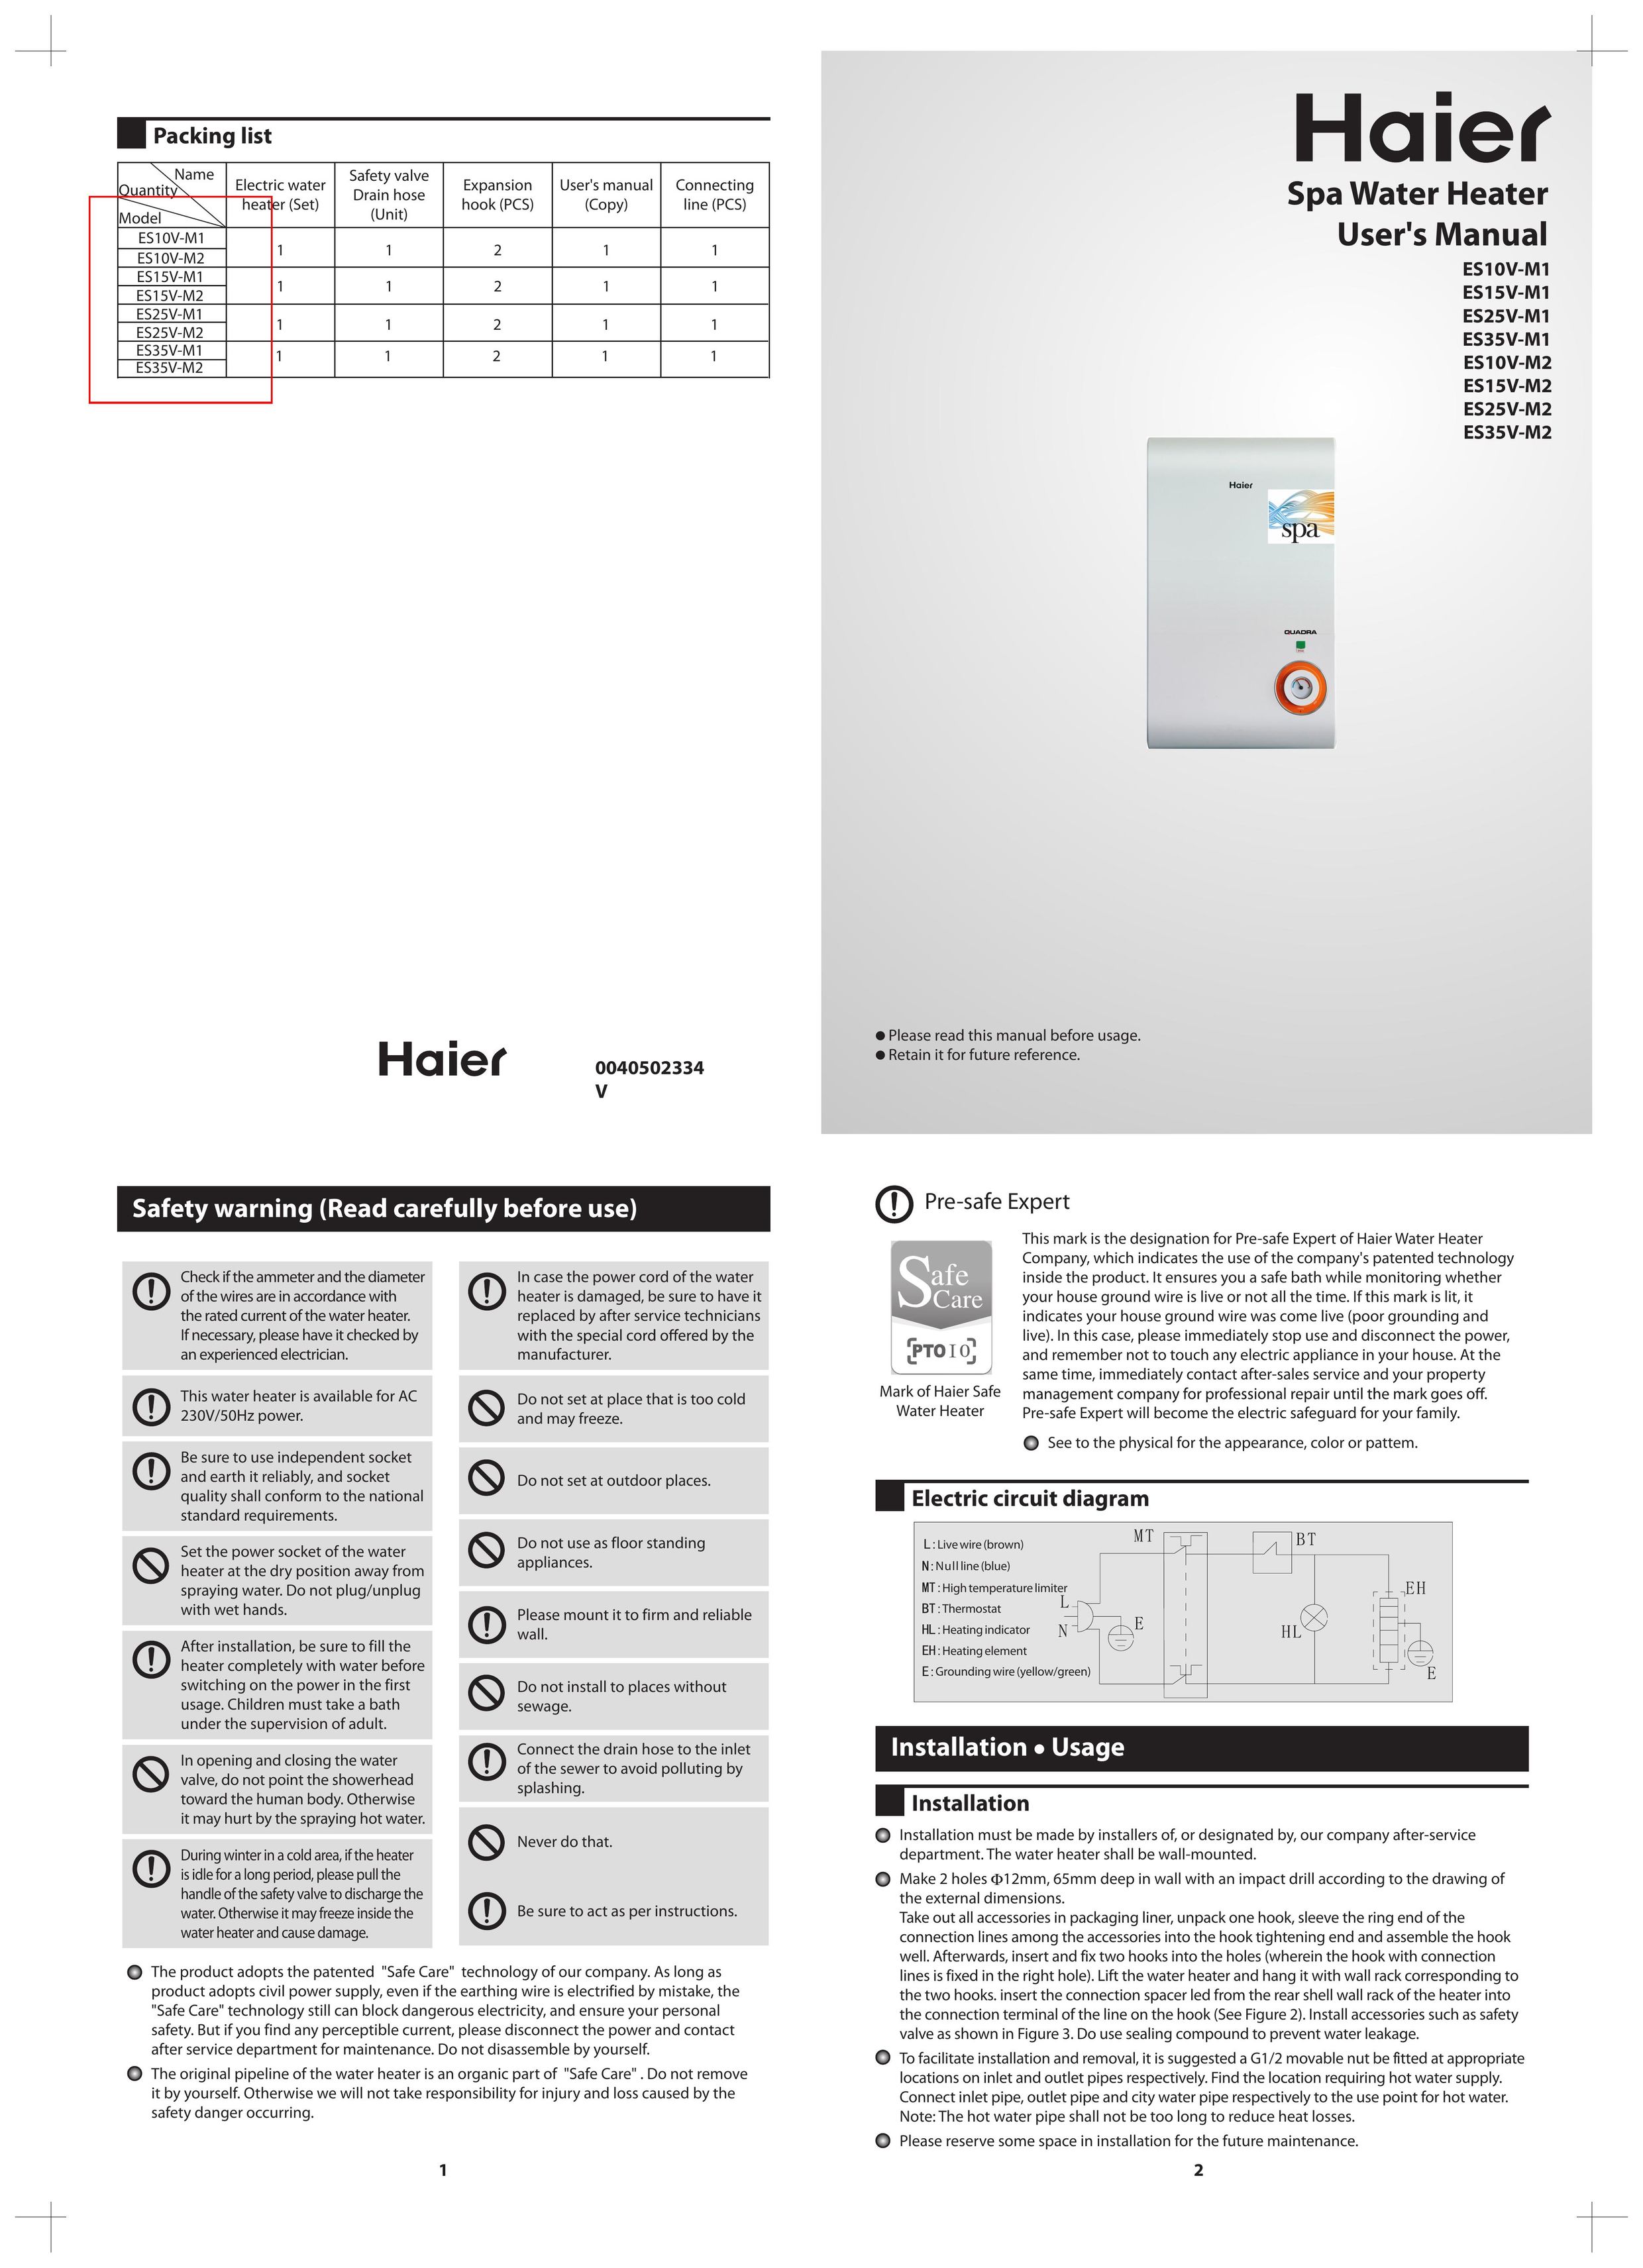 Haier ES10V-M1 Water Heater User Manual